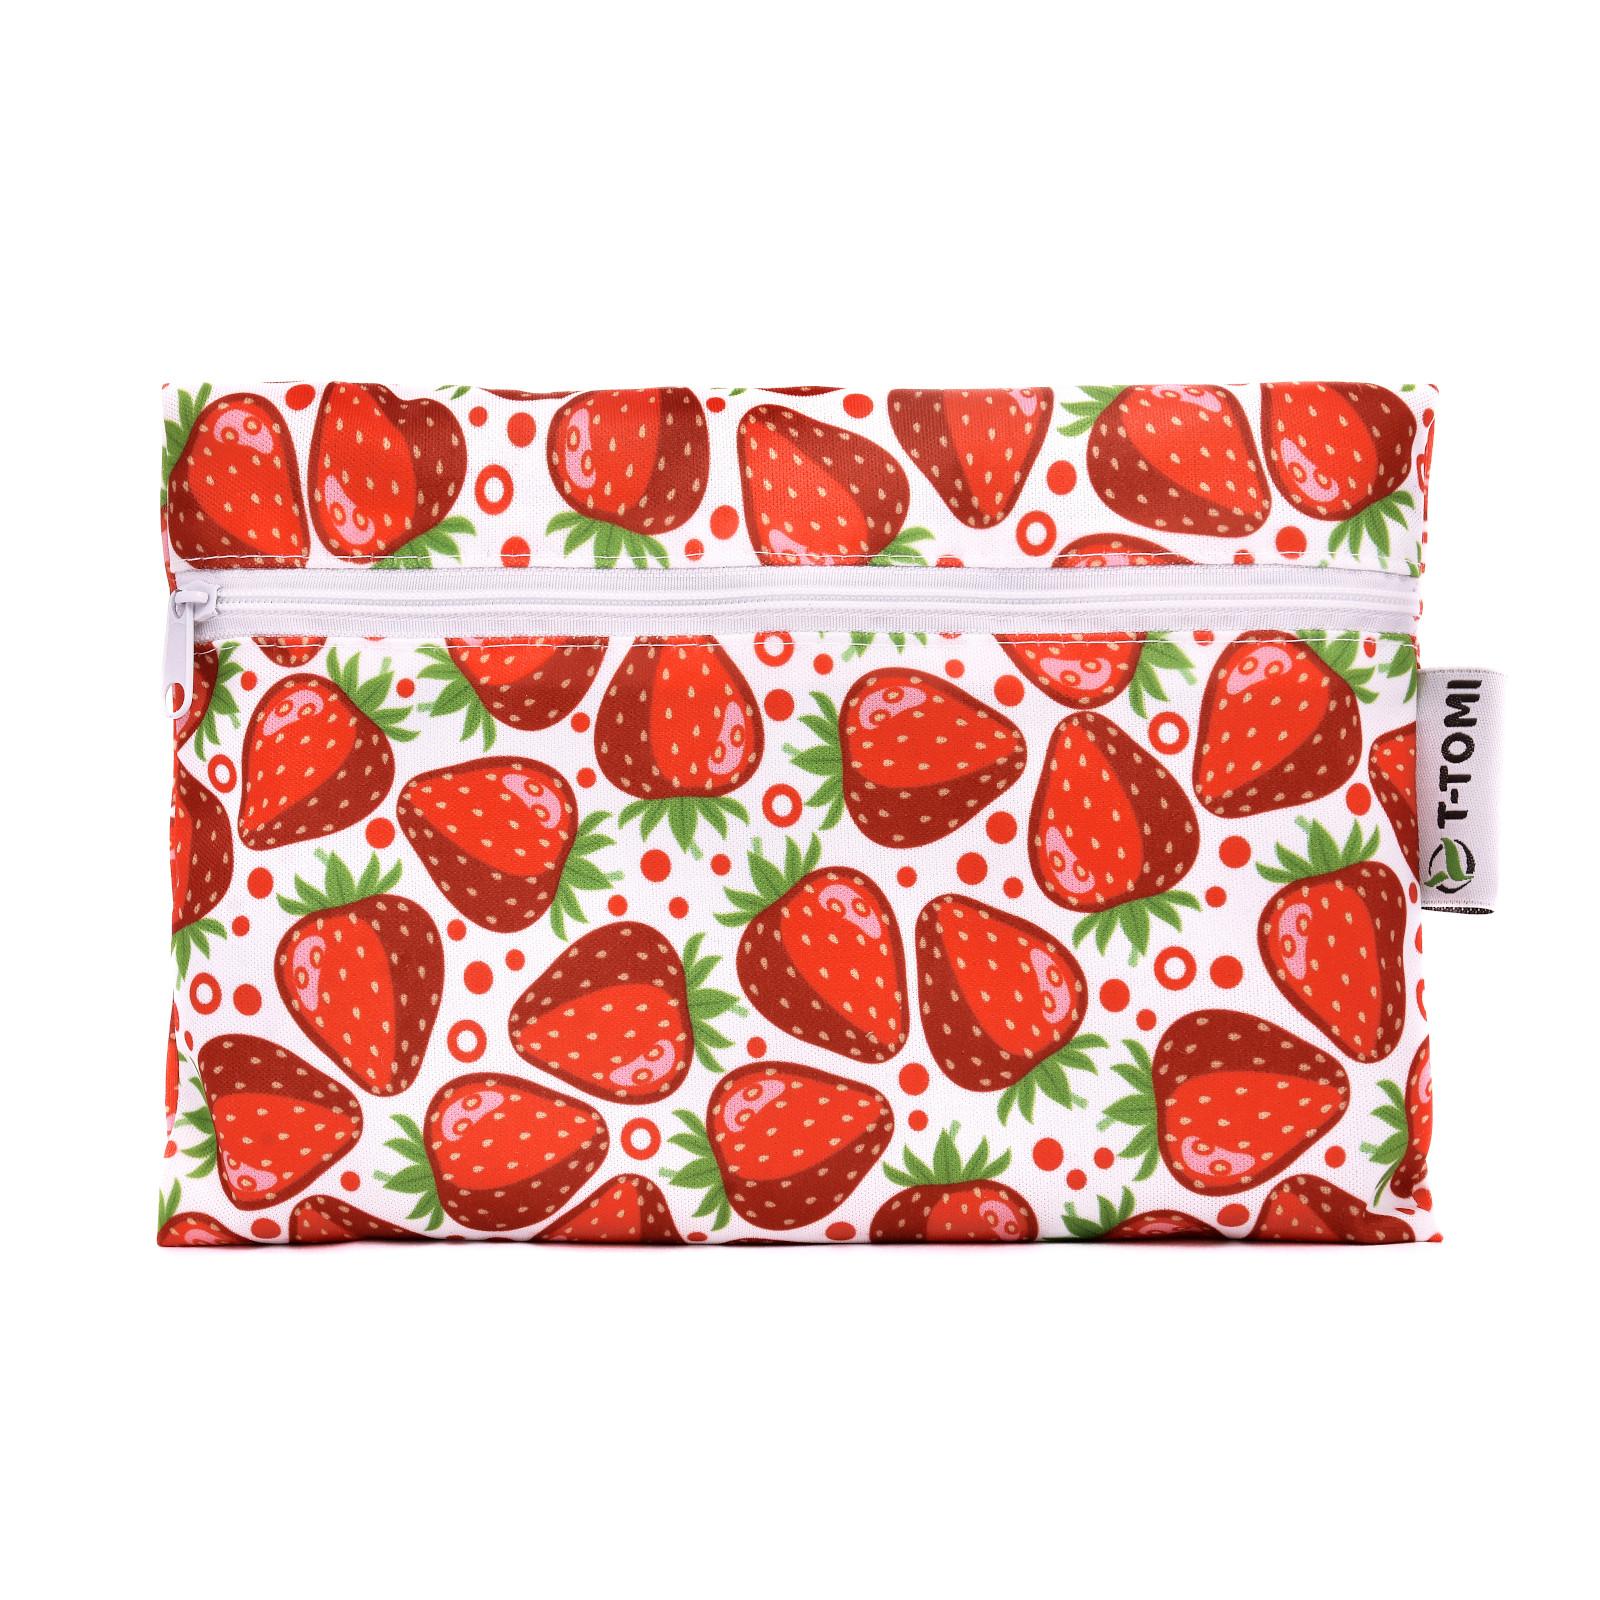 T-TOMI Nepromokavý pytlík strawberries / jahody 1 ks